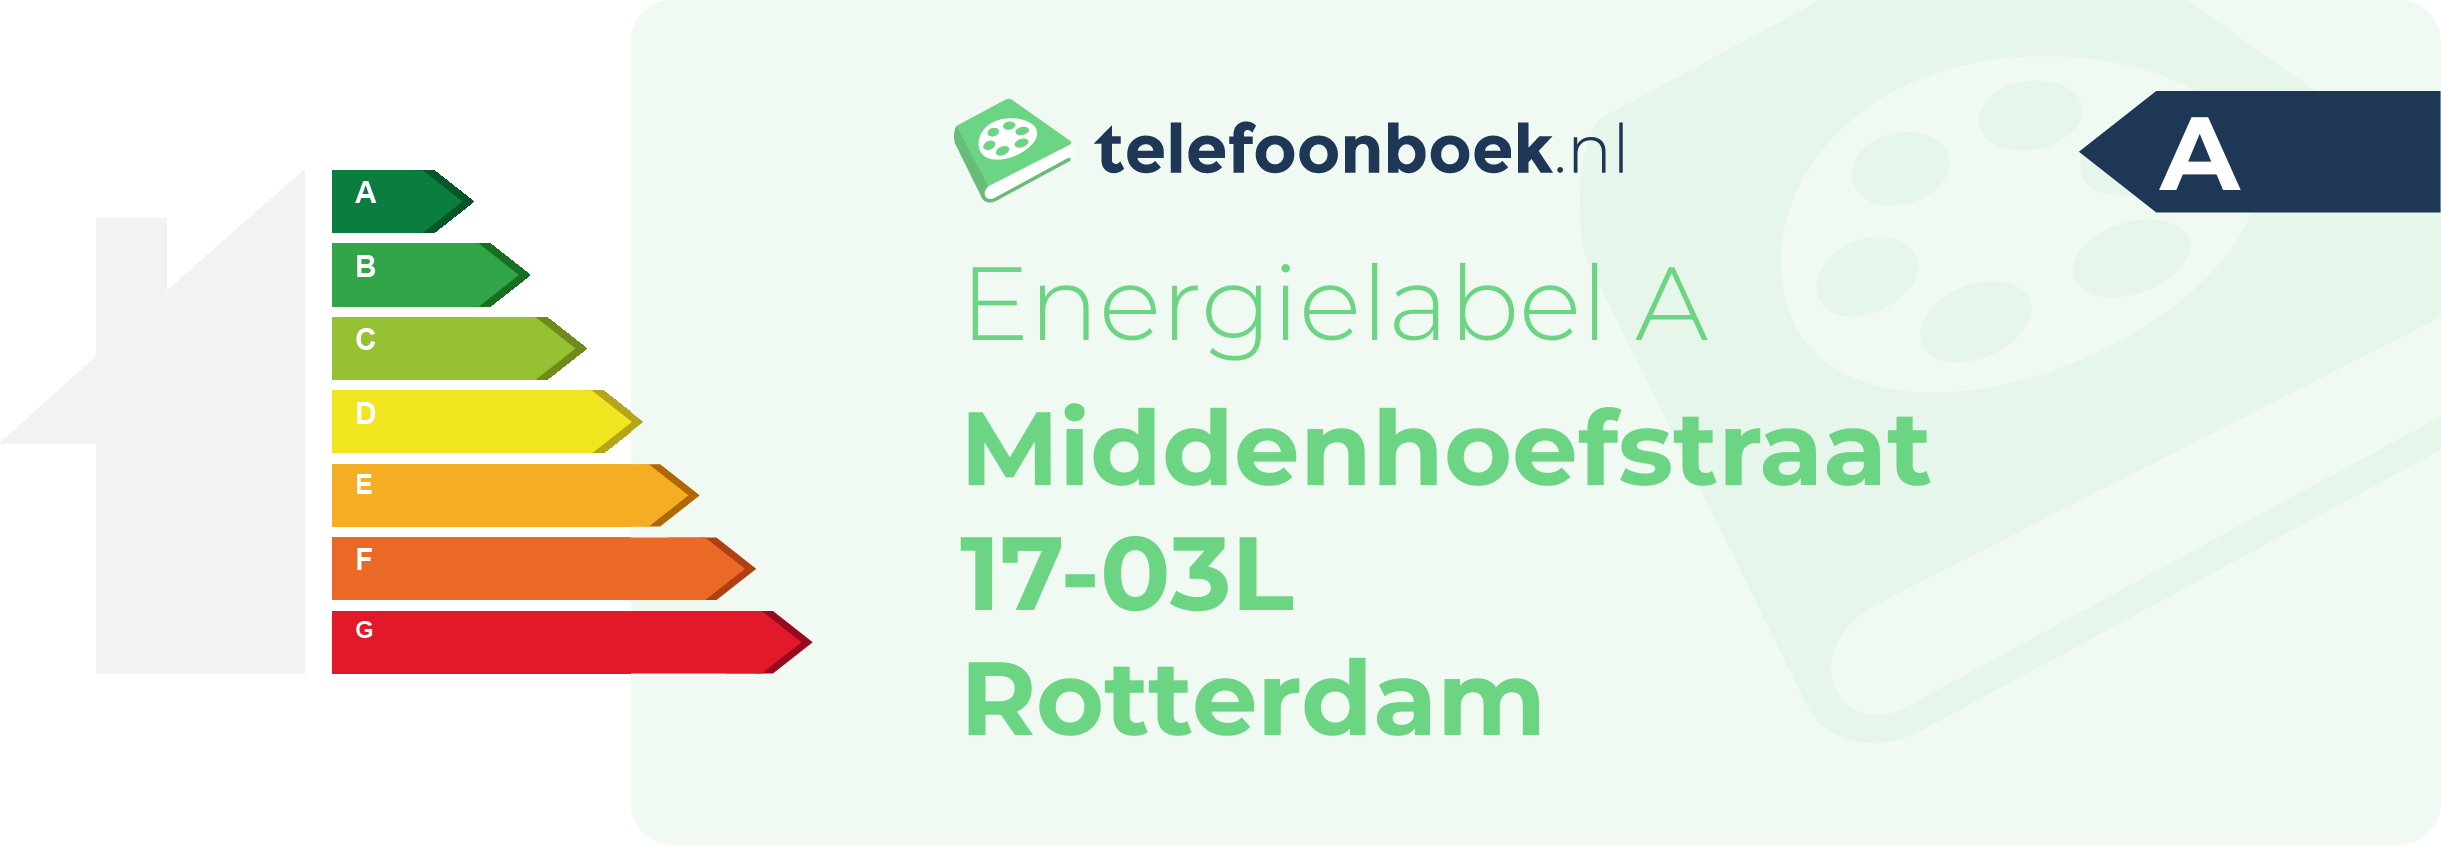 Energielabel Middenhoefstraat 17-03L Rotterdam